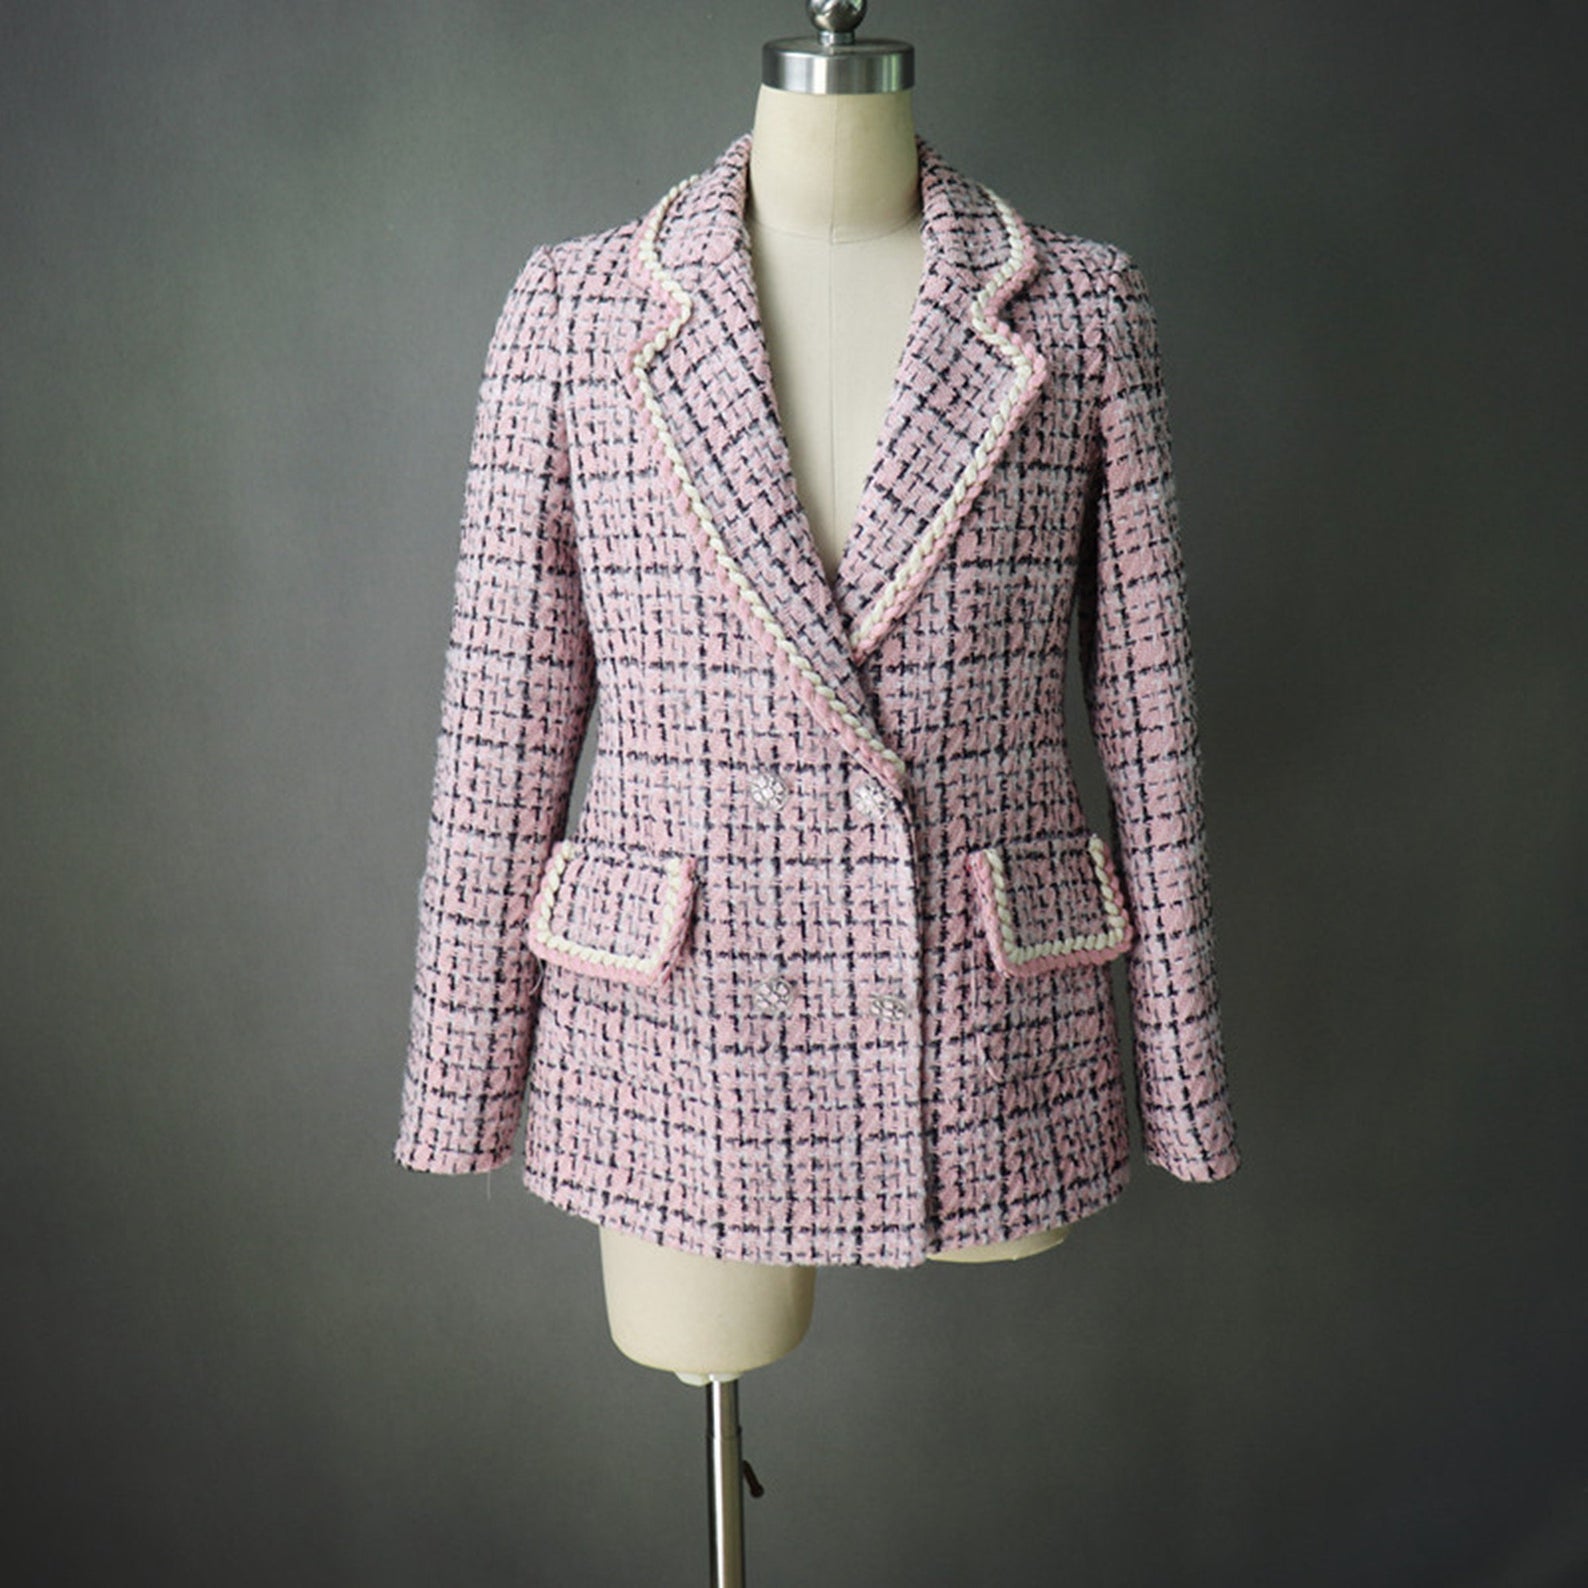 Womens Designer Inspired CUSTOM MADE to Order Pink Hounds tooth Tweed Jacket Coat Blazer